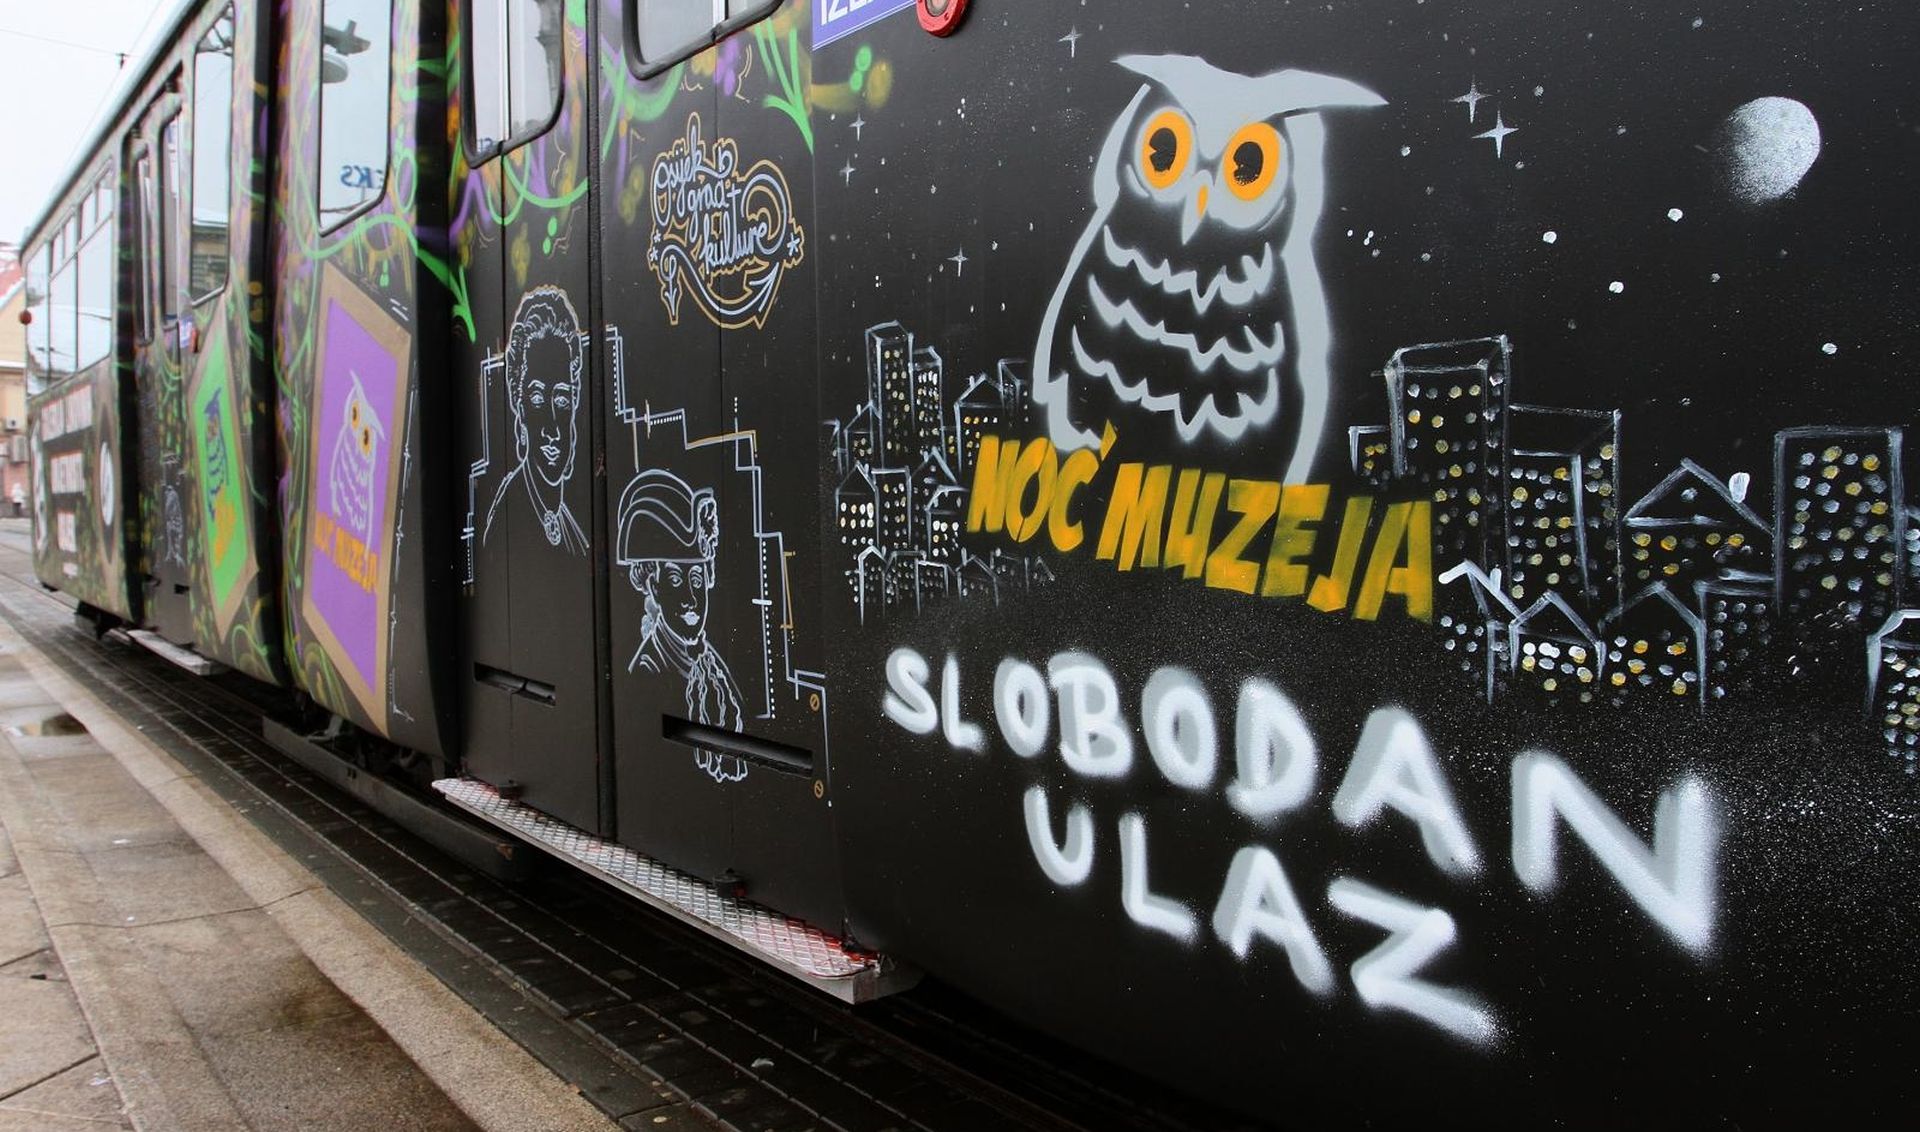 25.01.2013., Osijek - Slavonski biennale u pokretu, gradski tramvaj oslikan grafitima povodom noci muzeja. 
Photo: Marko Mrkonjic/PIXSELL